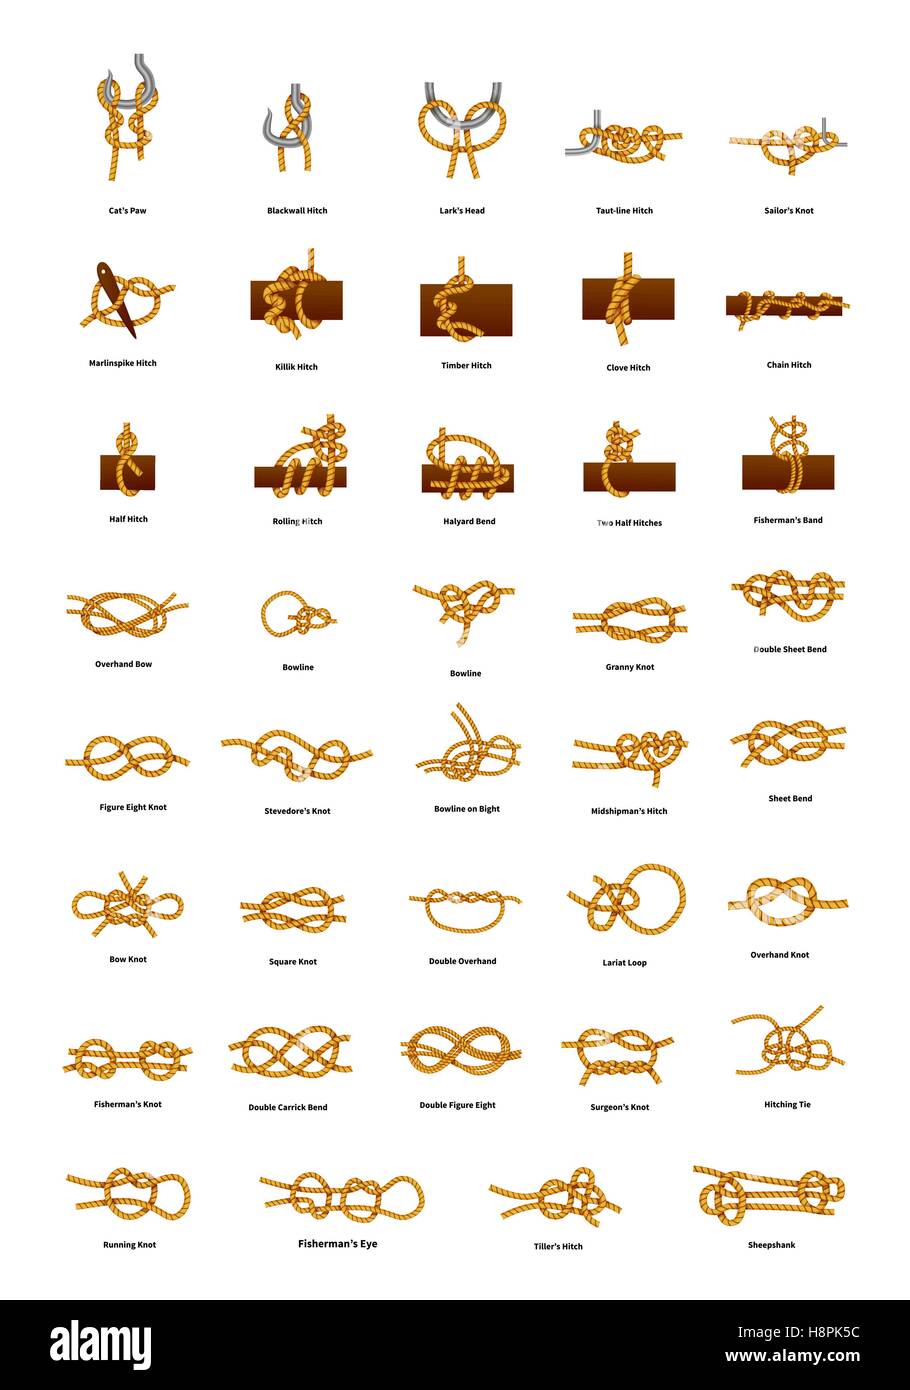 https://c8.alamy.com/comp/H8PK5C/big-set-of-different-sea-knots-isolated-on-white-H8PK5C.jpg